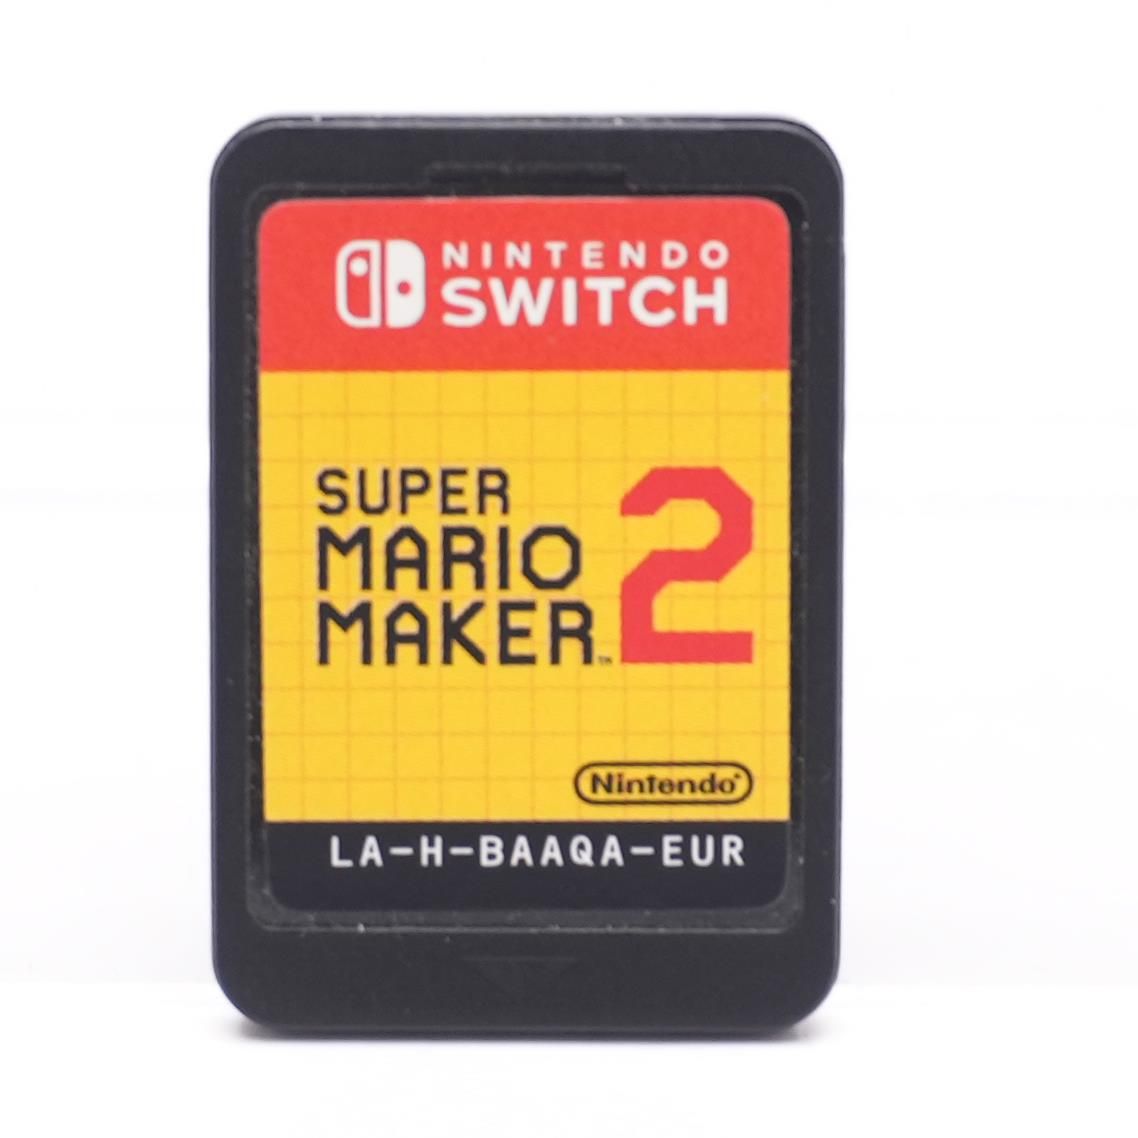 Maker Super Mario Baggage Nintendo Ver.) – 2 Switch Unclaimed (European For